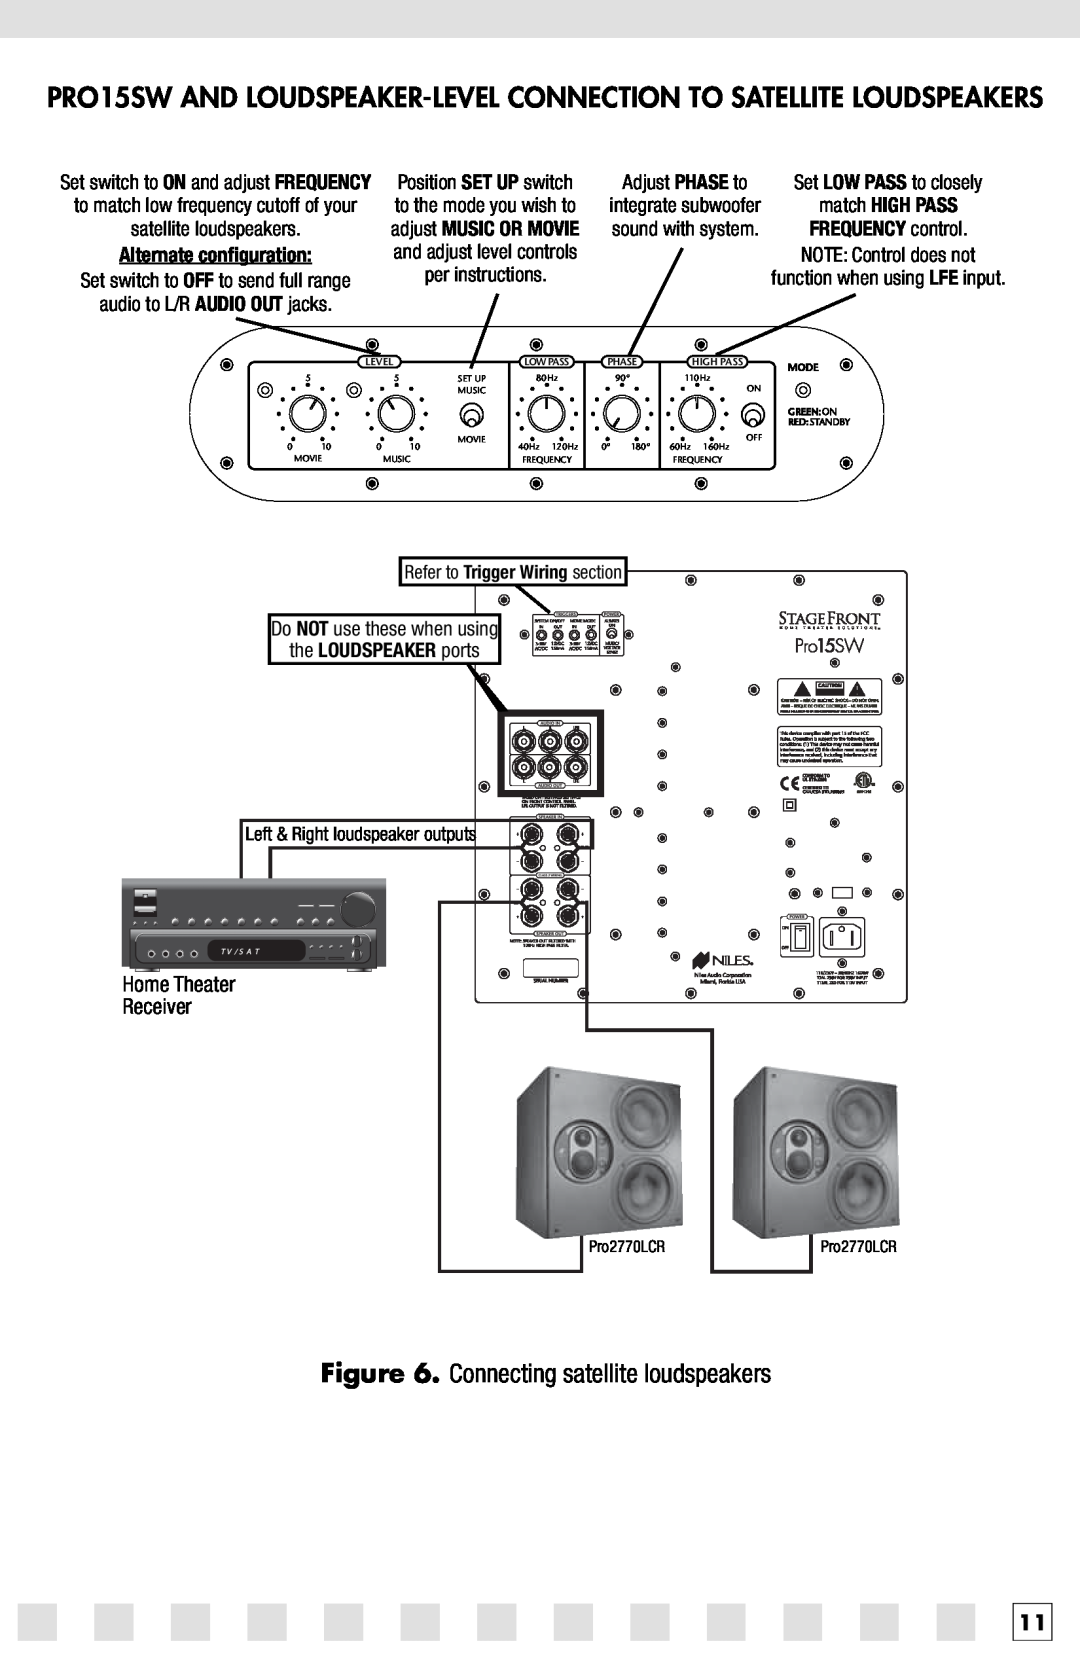 Niles Audio PRO15SW manual Connecting satellite loudspeakers, Home Theater Receiver, Alternate conﬁguration 